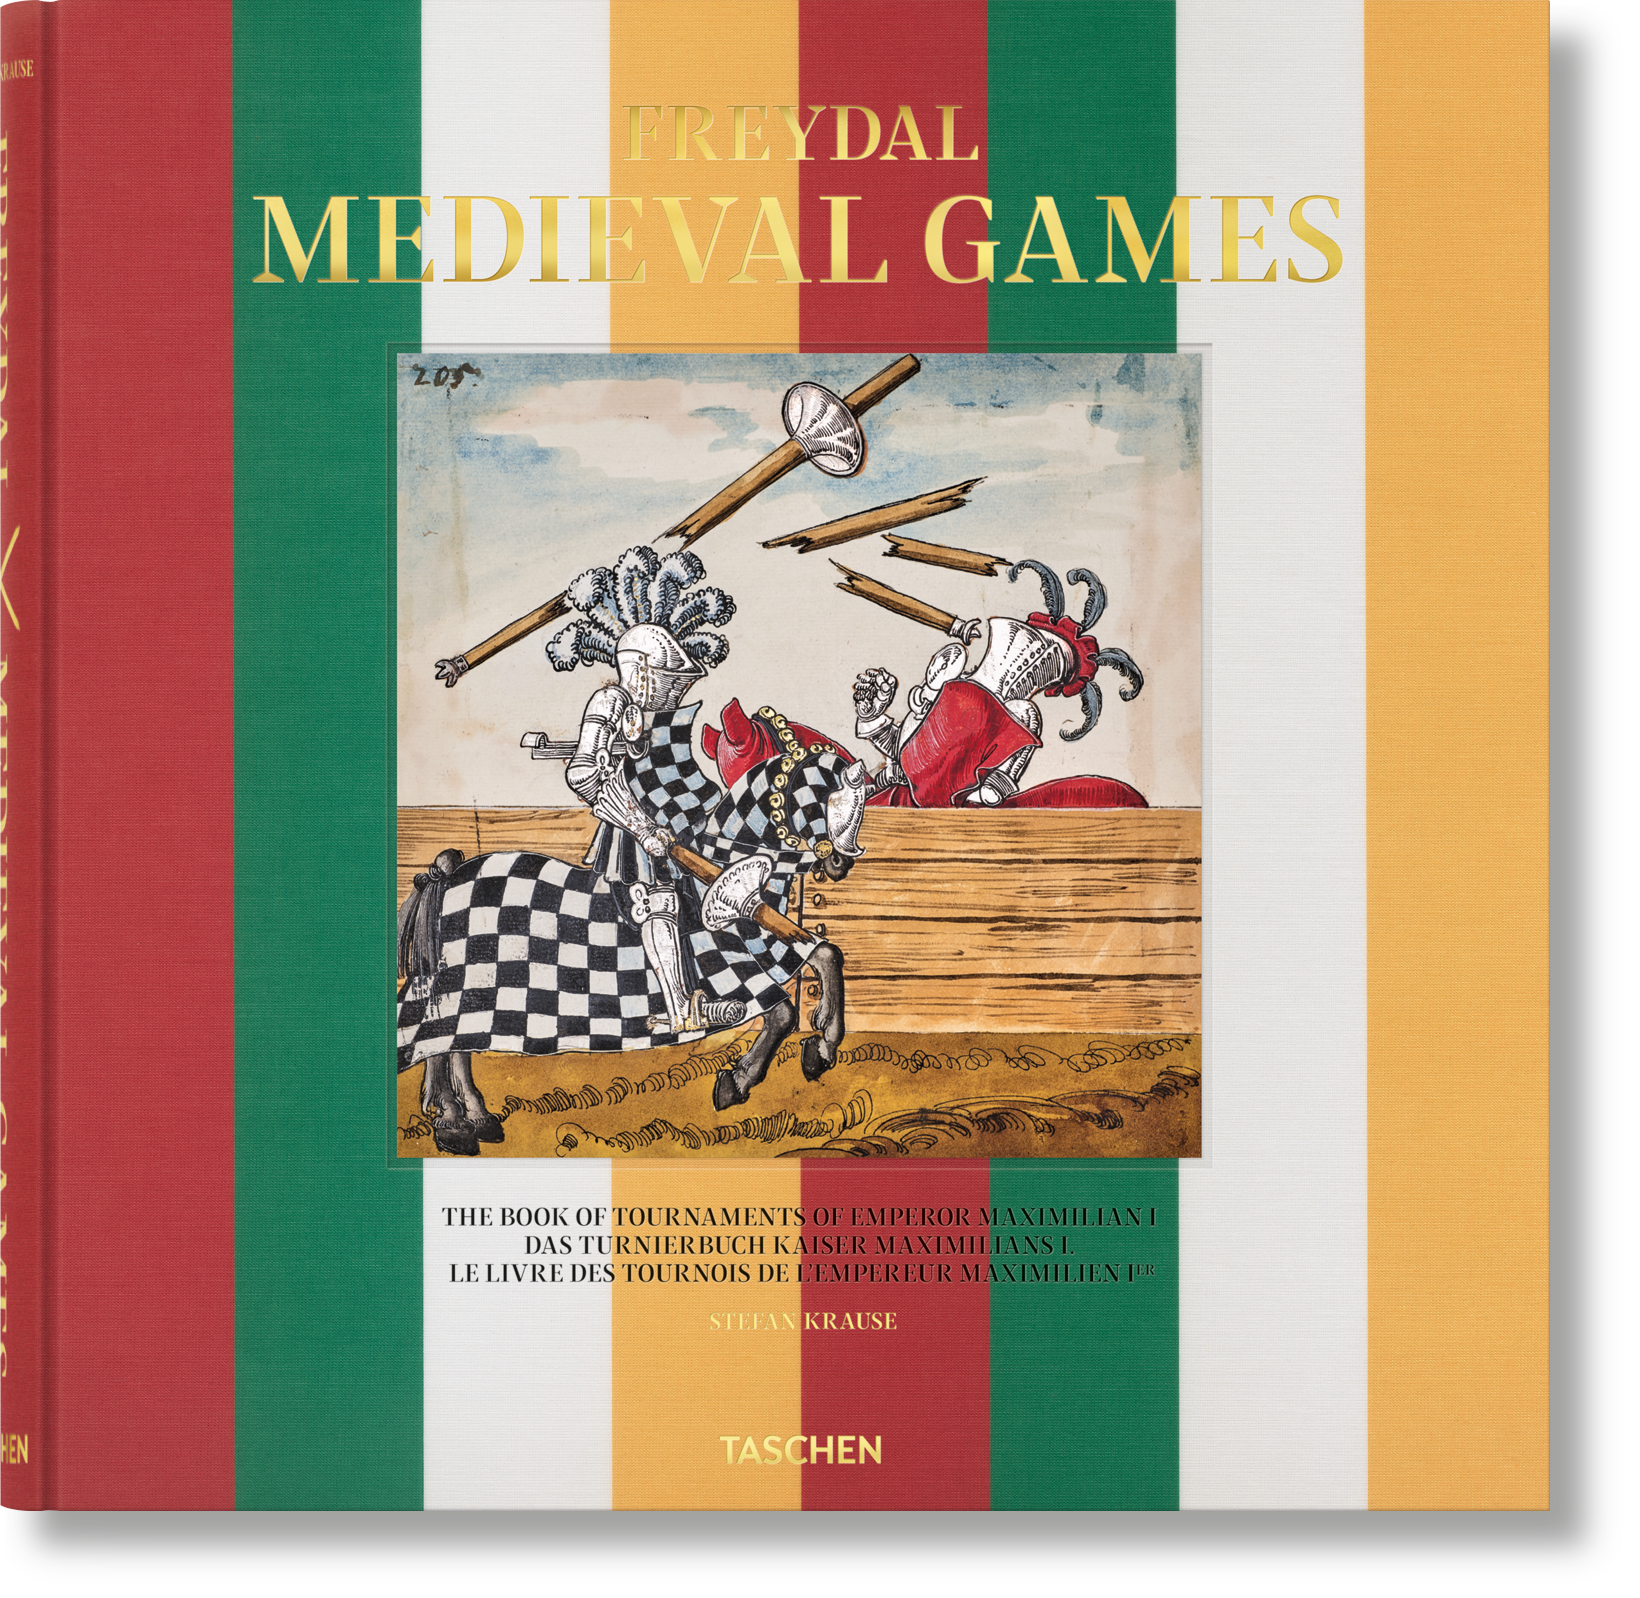 Artbook - Sách Tiếng Anh - Freydal Medieval Games